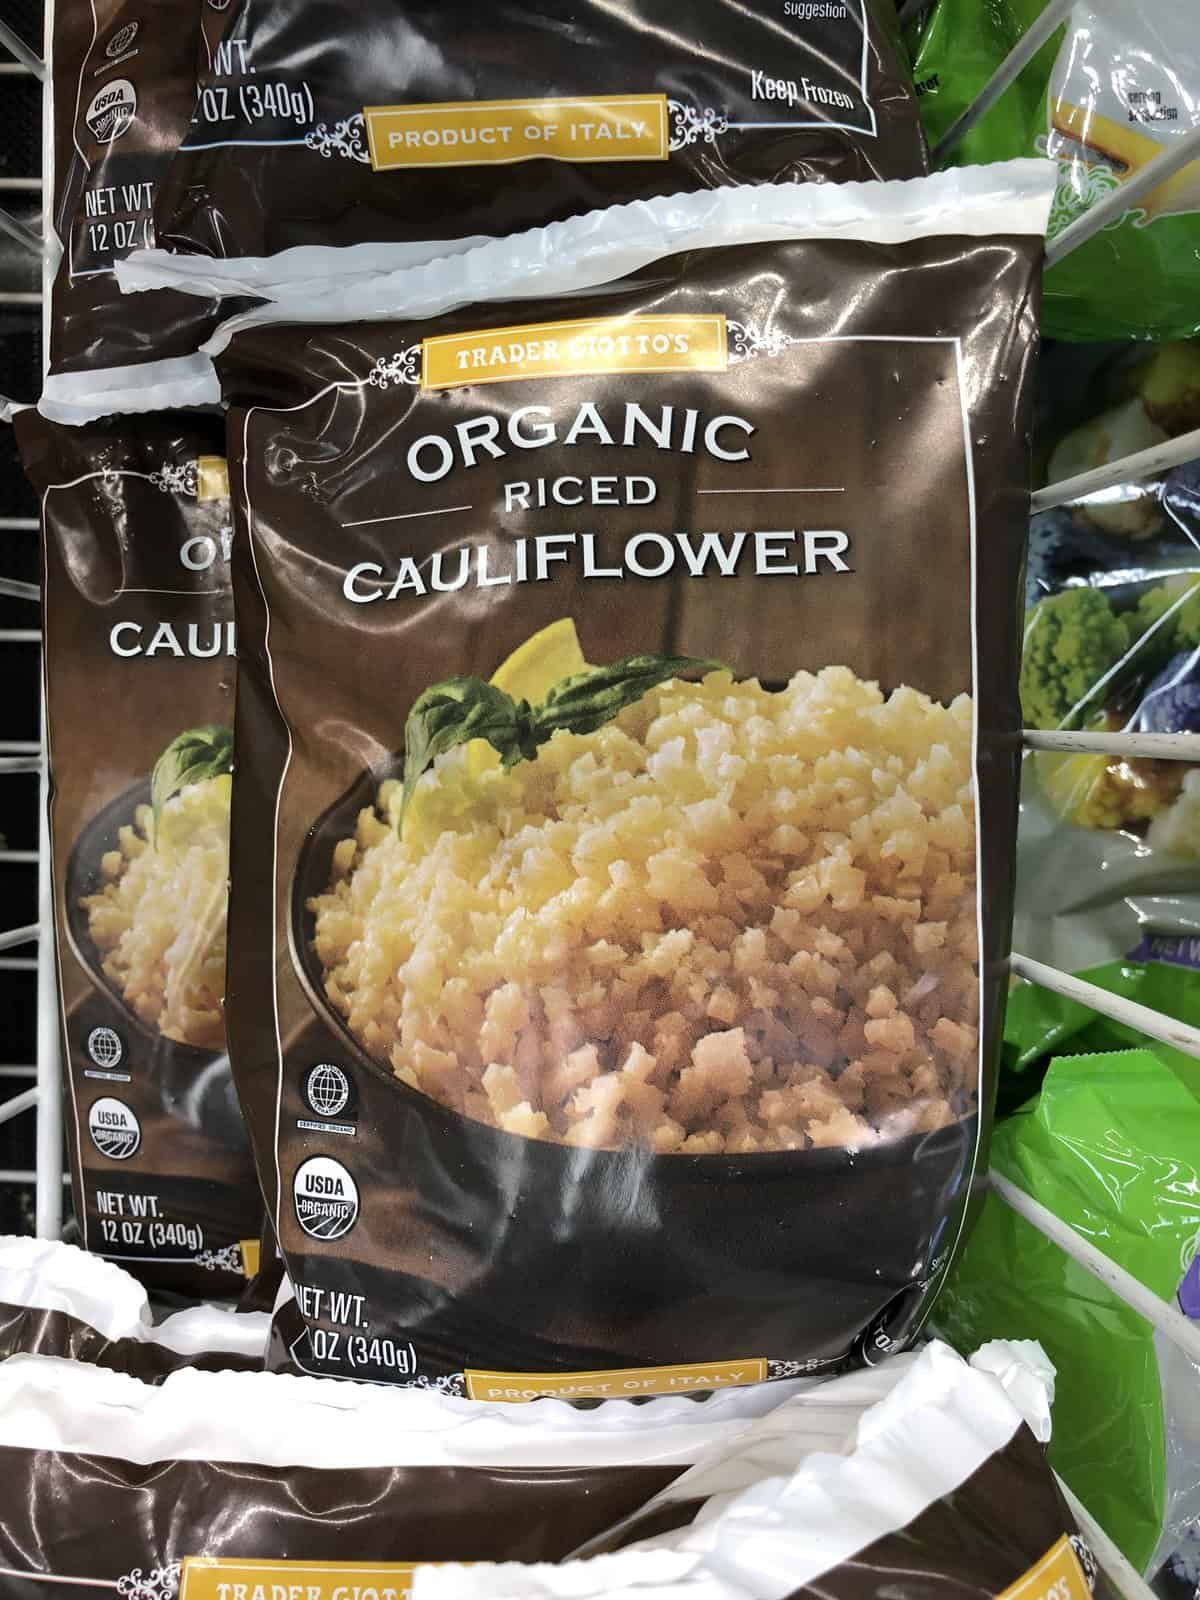 Organic Riced Cauliflower